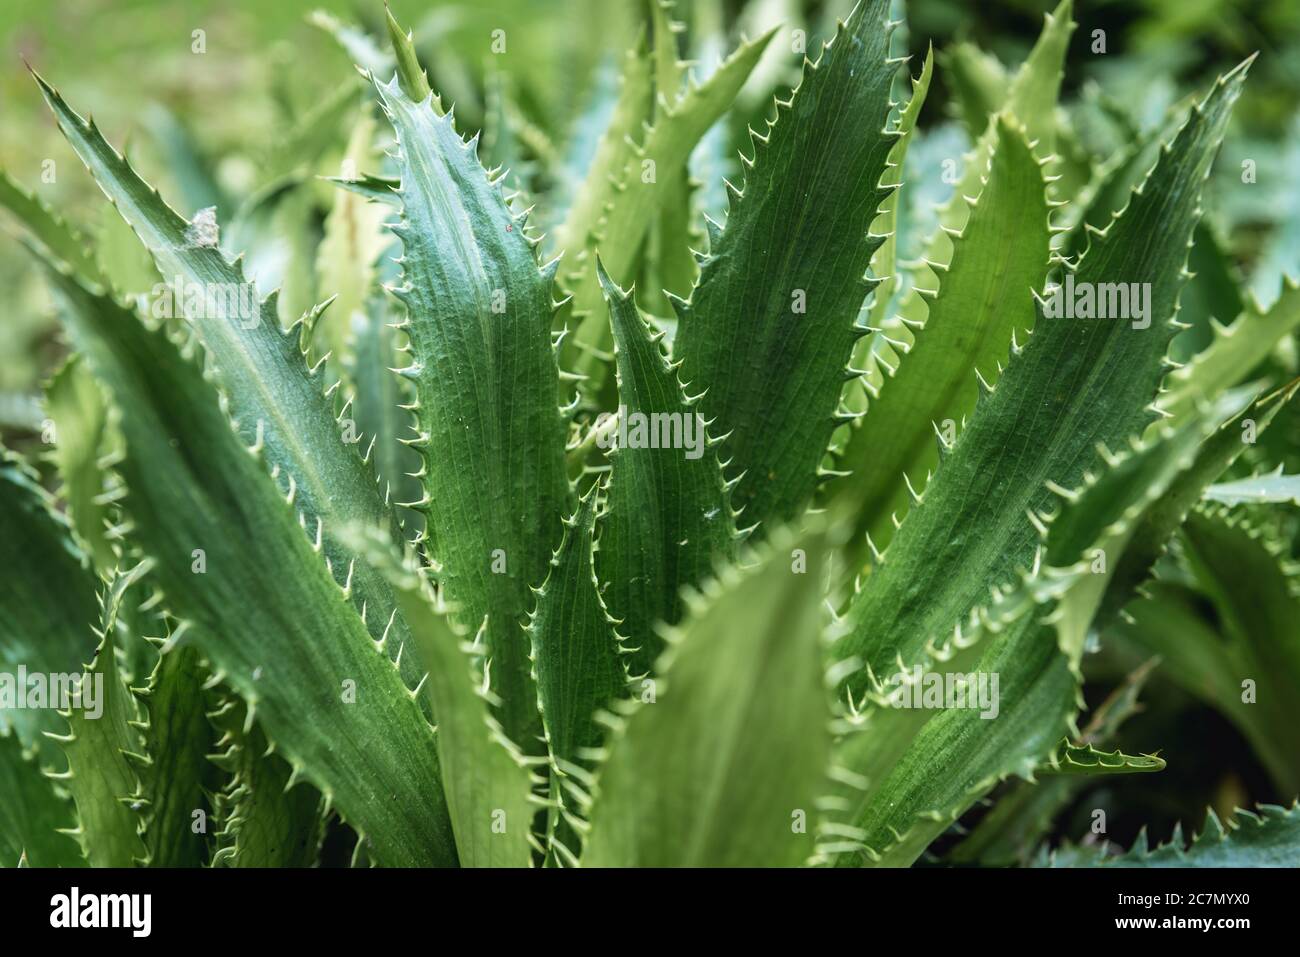 Close up on Eryngium bromeliifolium plant in garden, Sea Holly plant Stock Photo